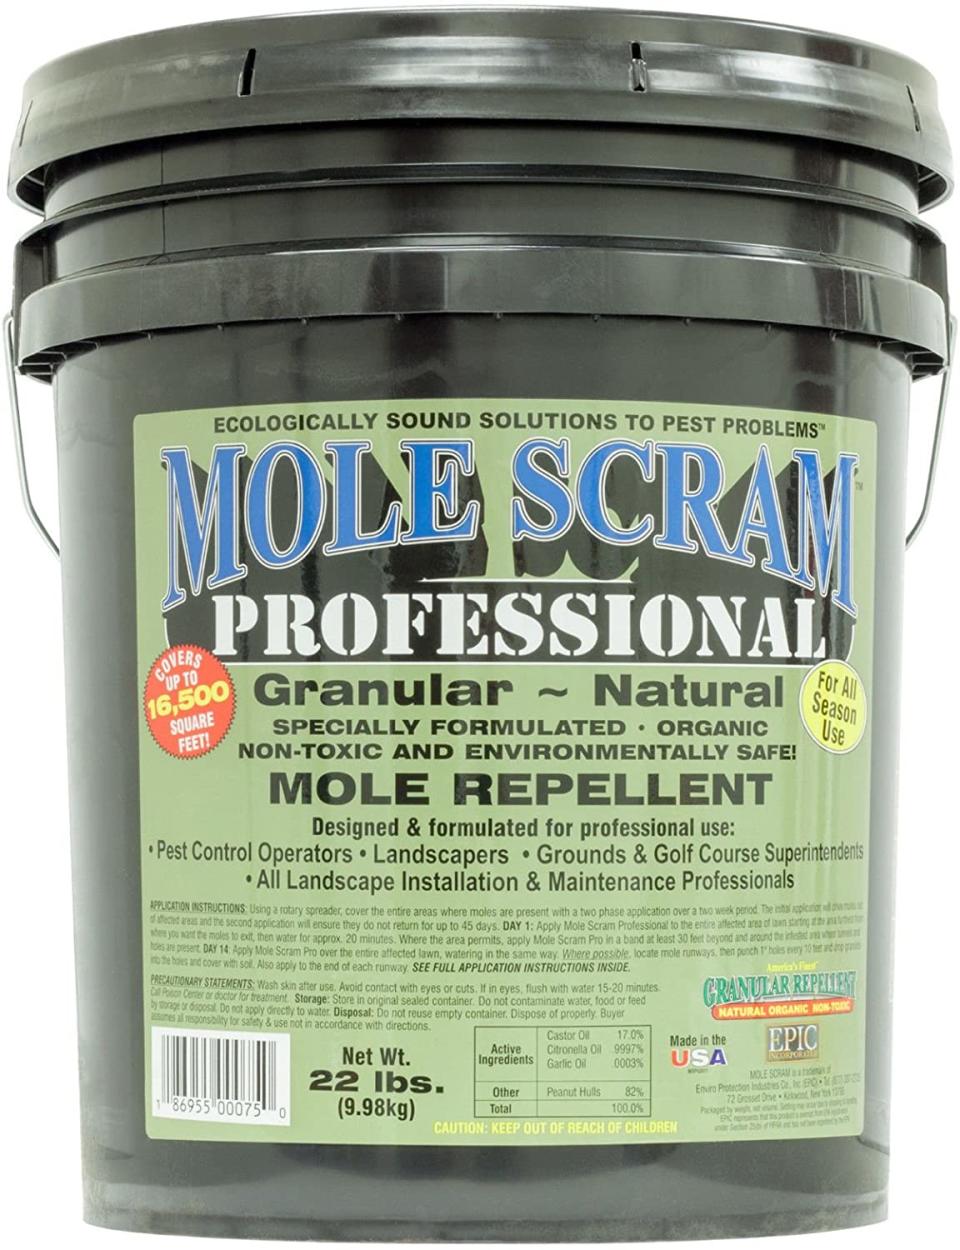 EPIC Mole Scram Professional